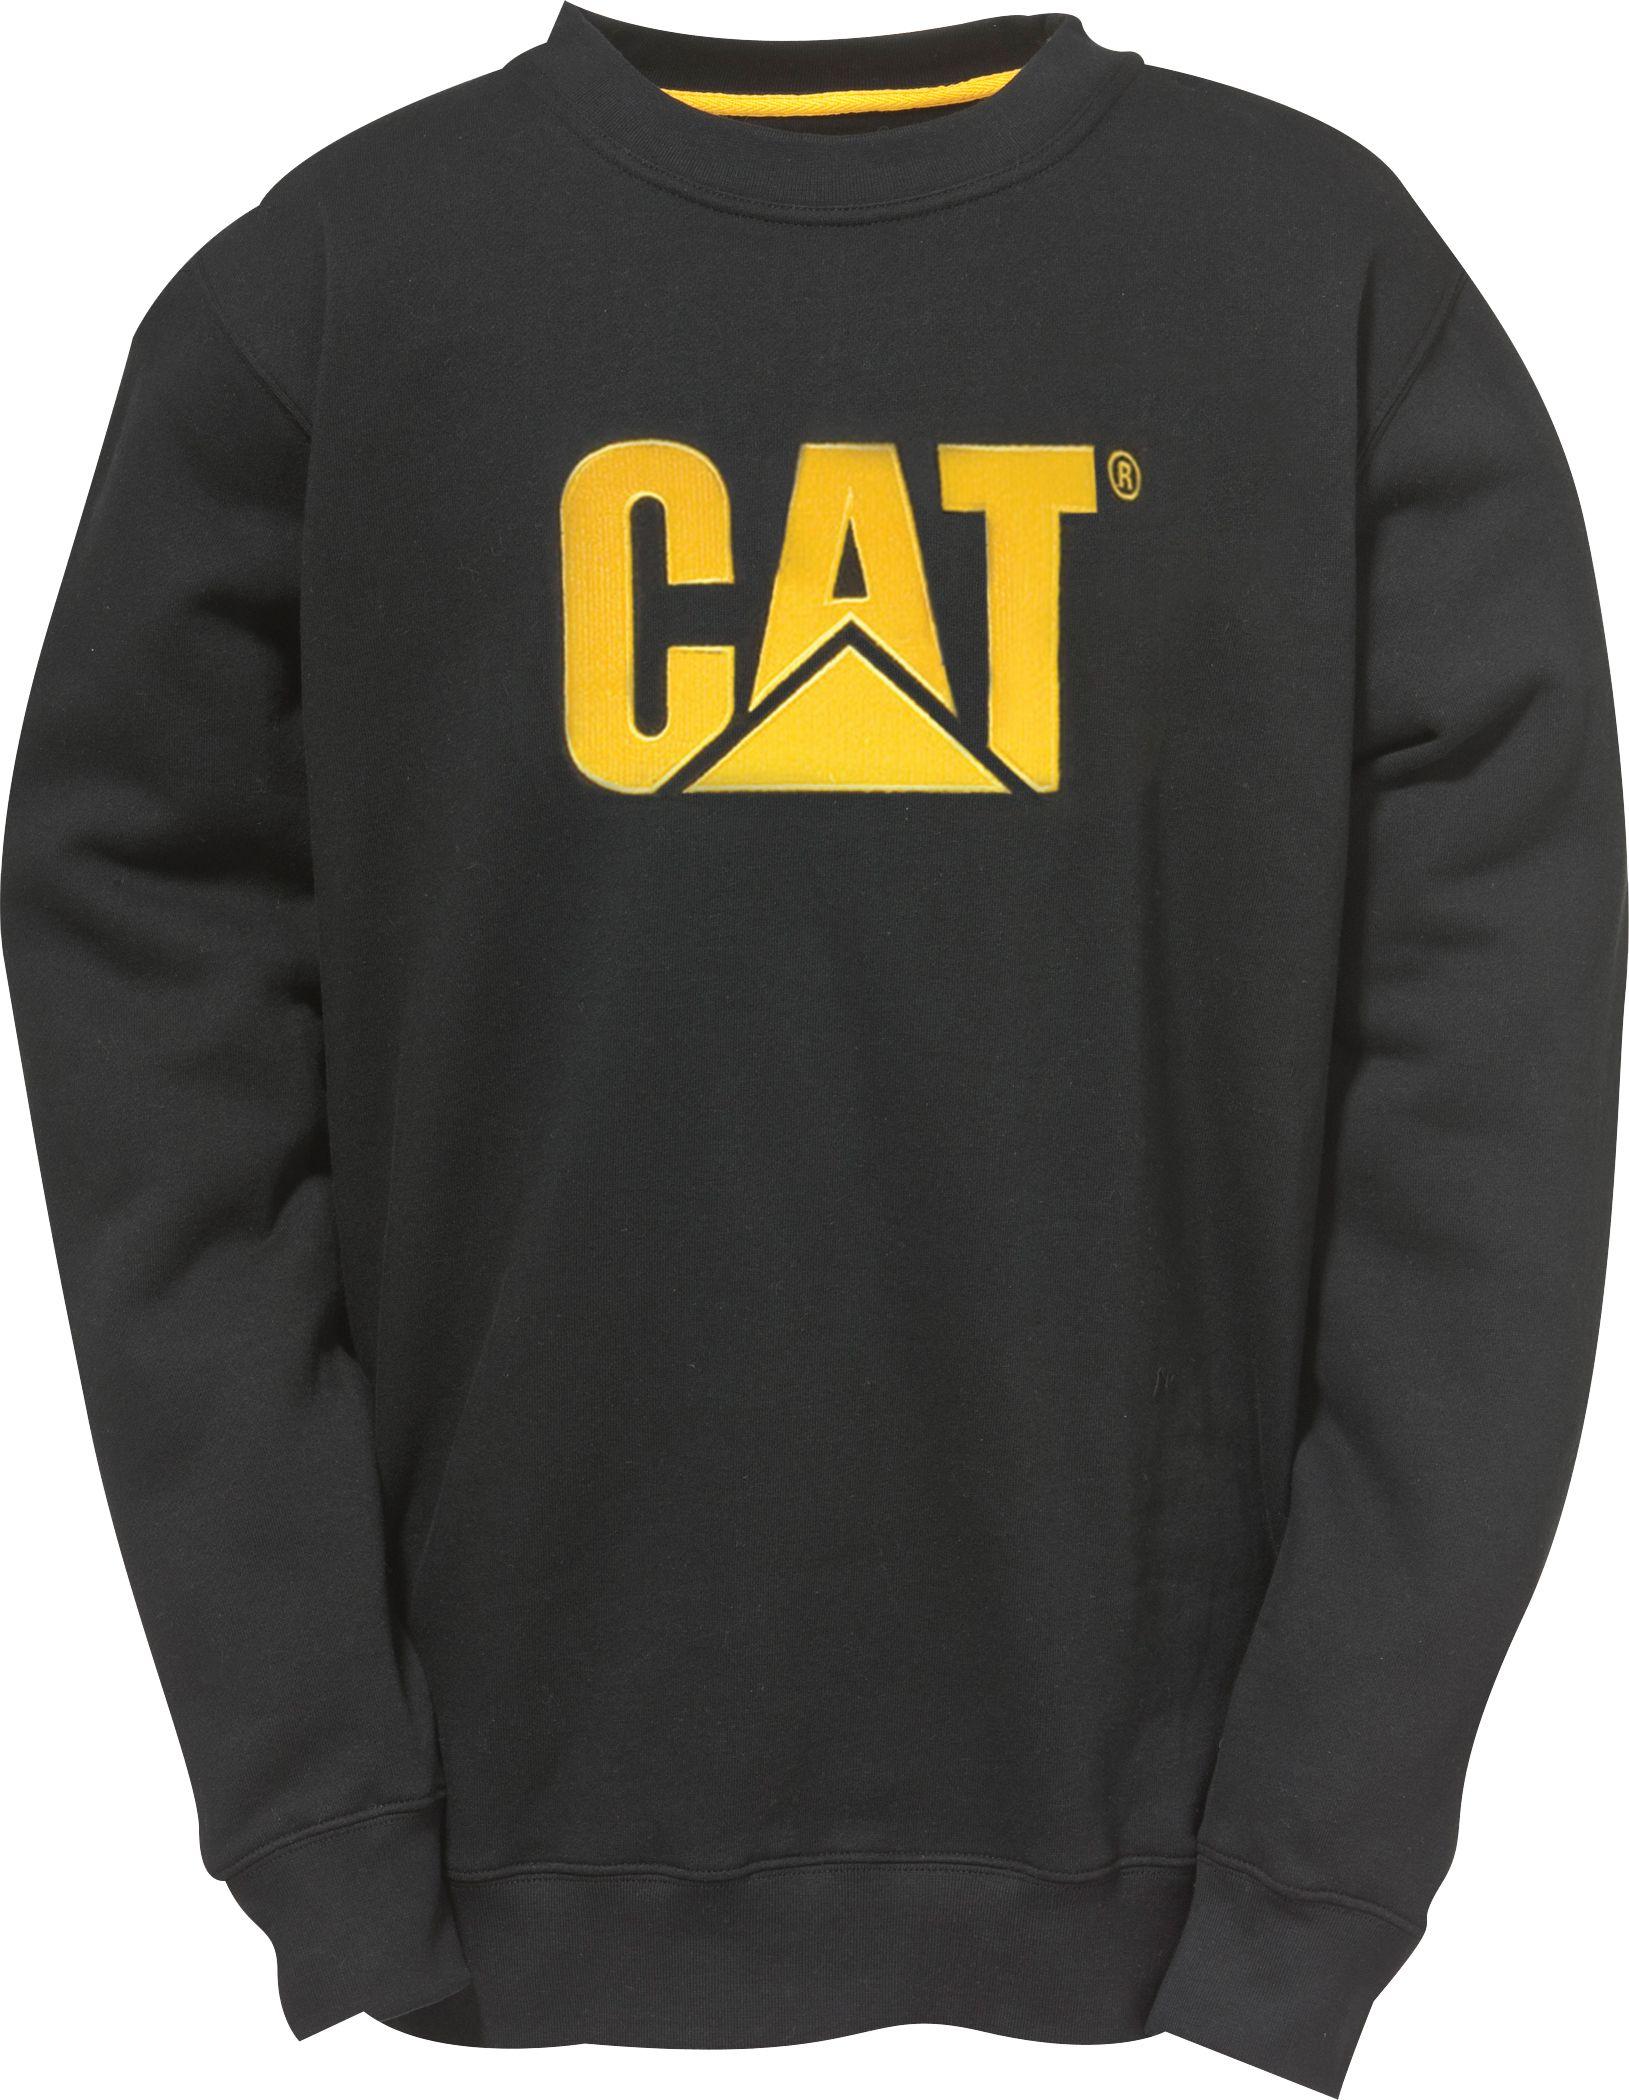 Black Caterpillar Logo - Caterpillar Logo Crewneck Sweatshirt 1910051 016 M, 43% Off